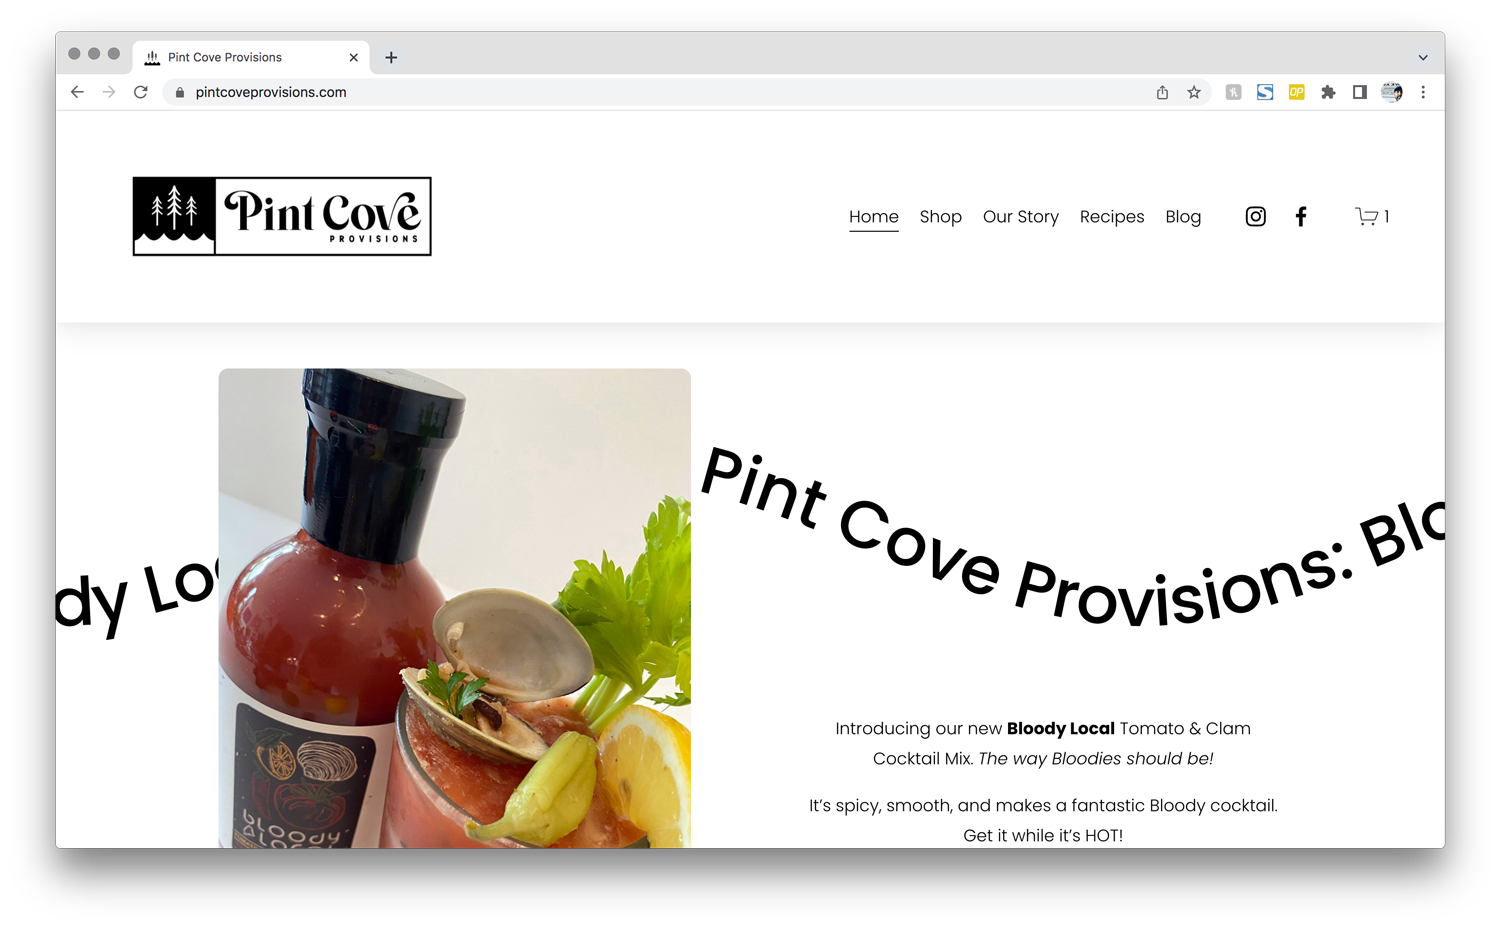 madlab design websites - pint cove provisions